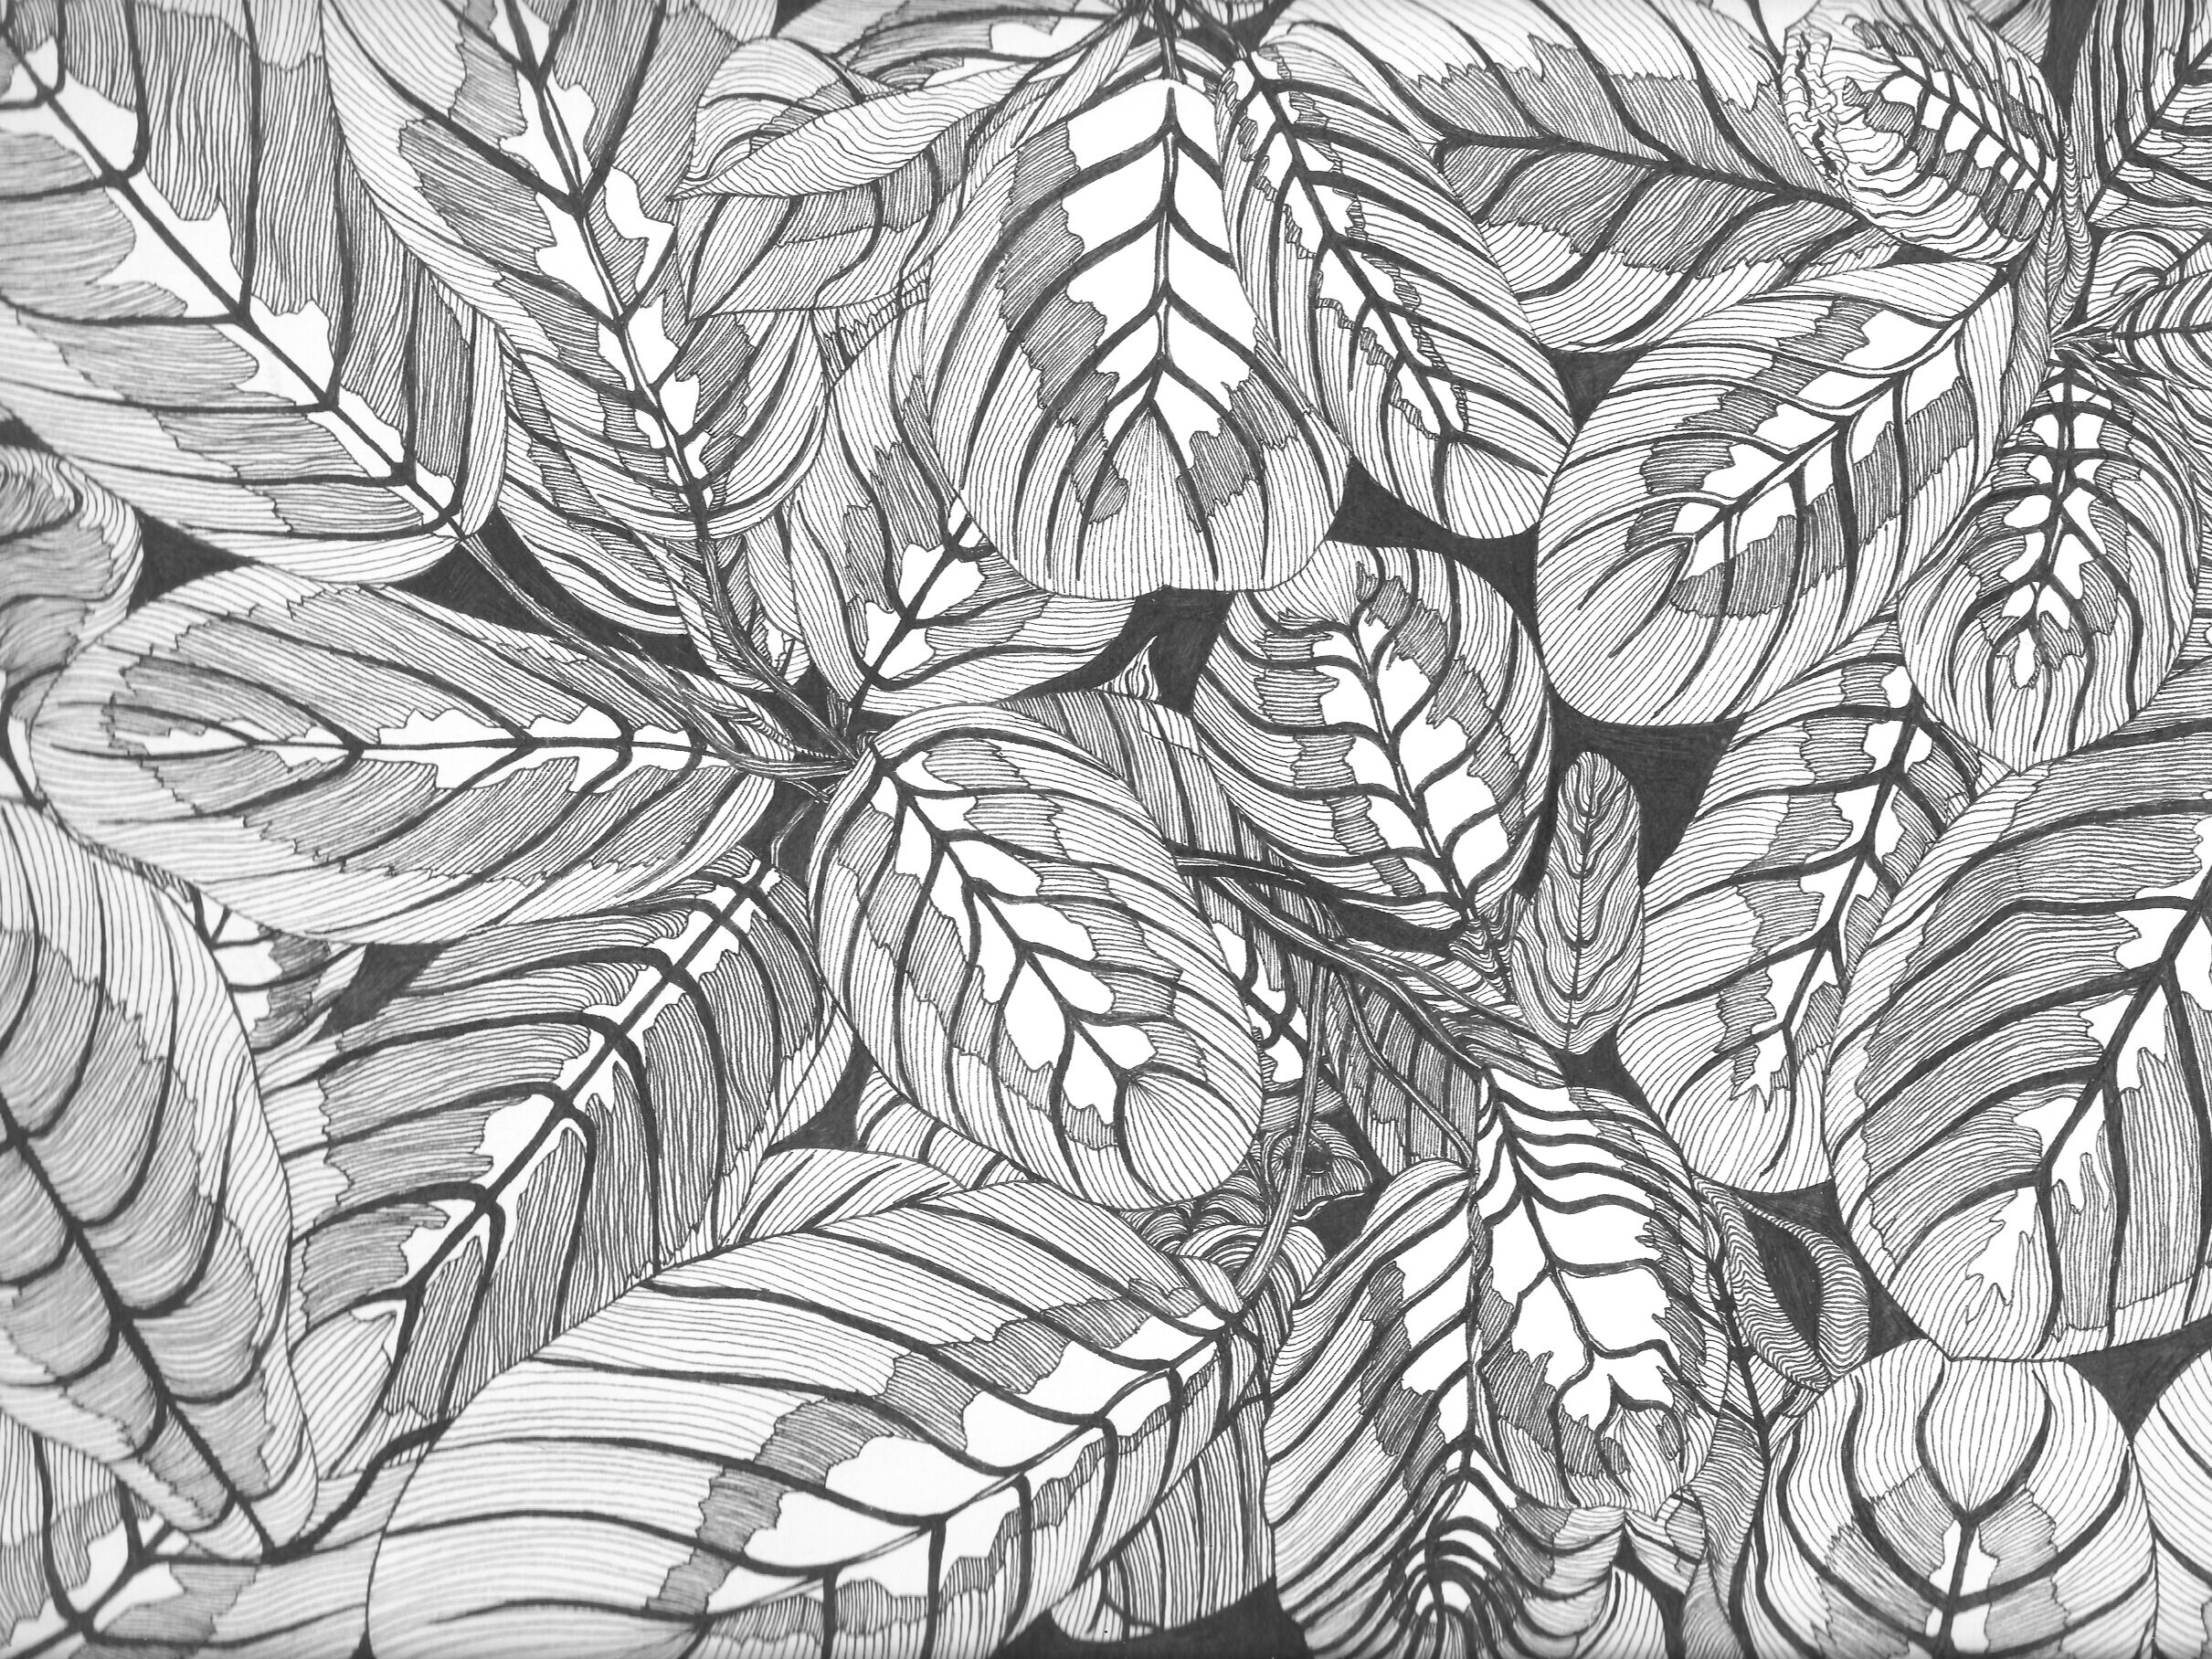   Maranta leuconeura (Prayer plant) , Ink Pen on Paper, 9 x 12”, 2020 